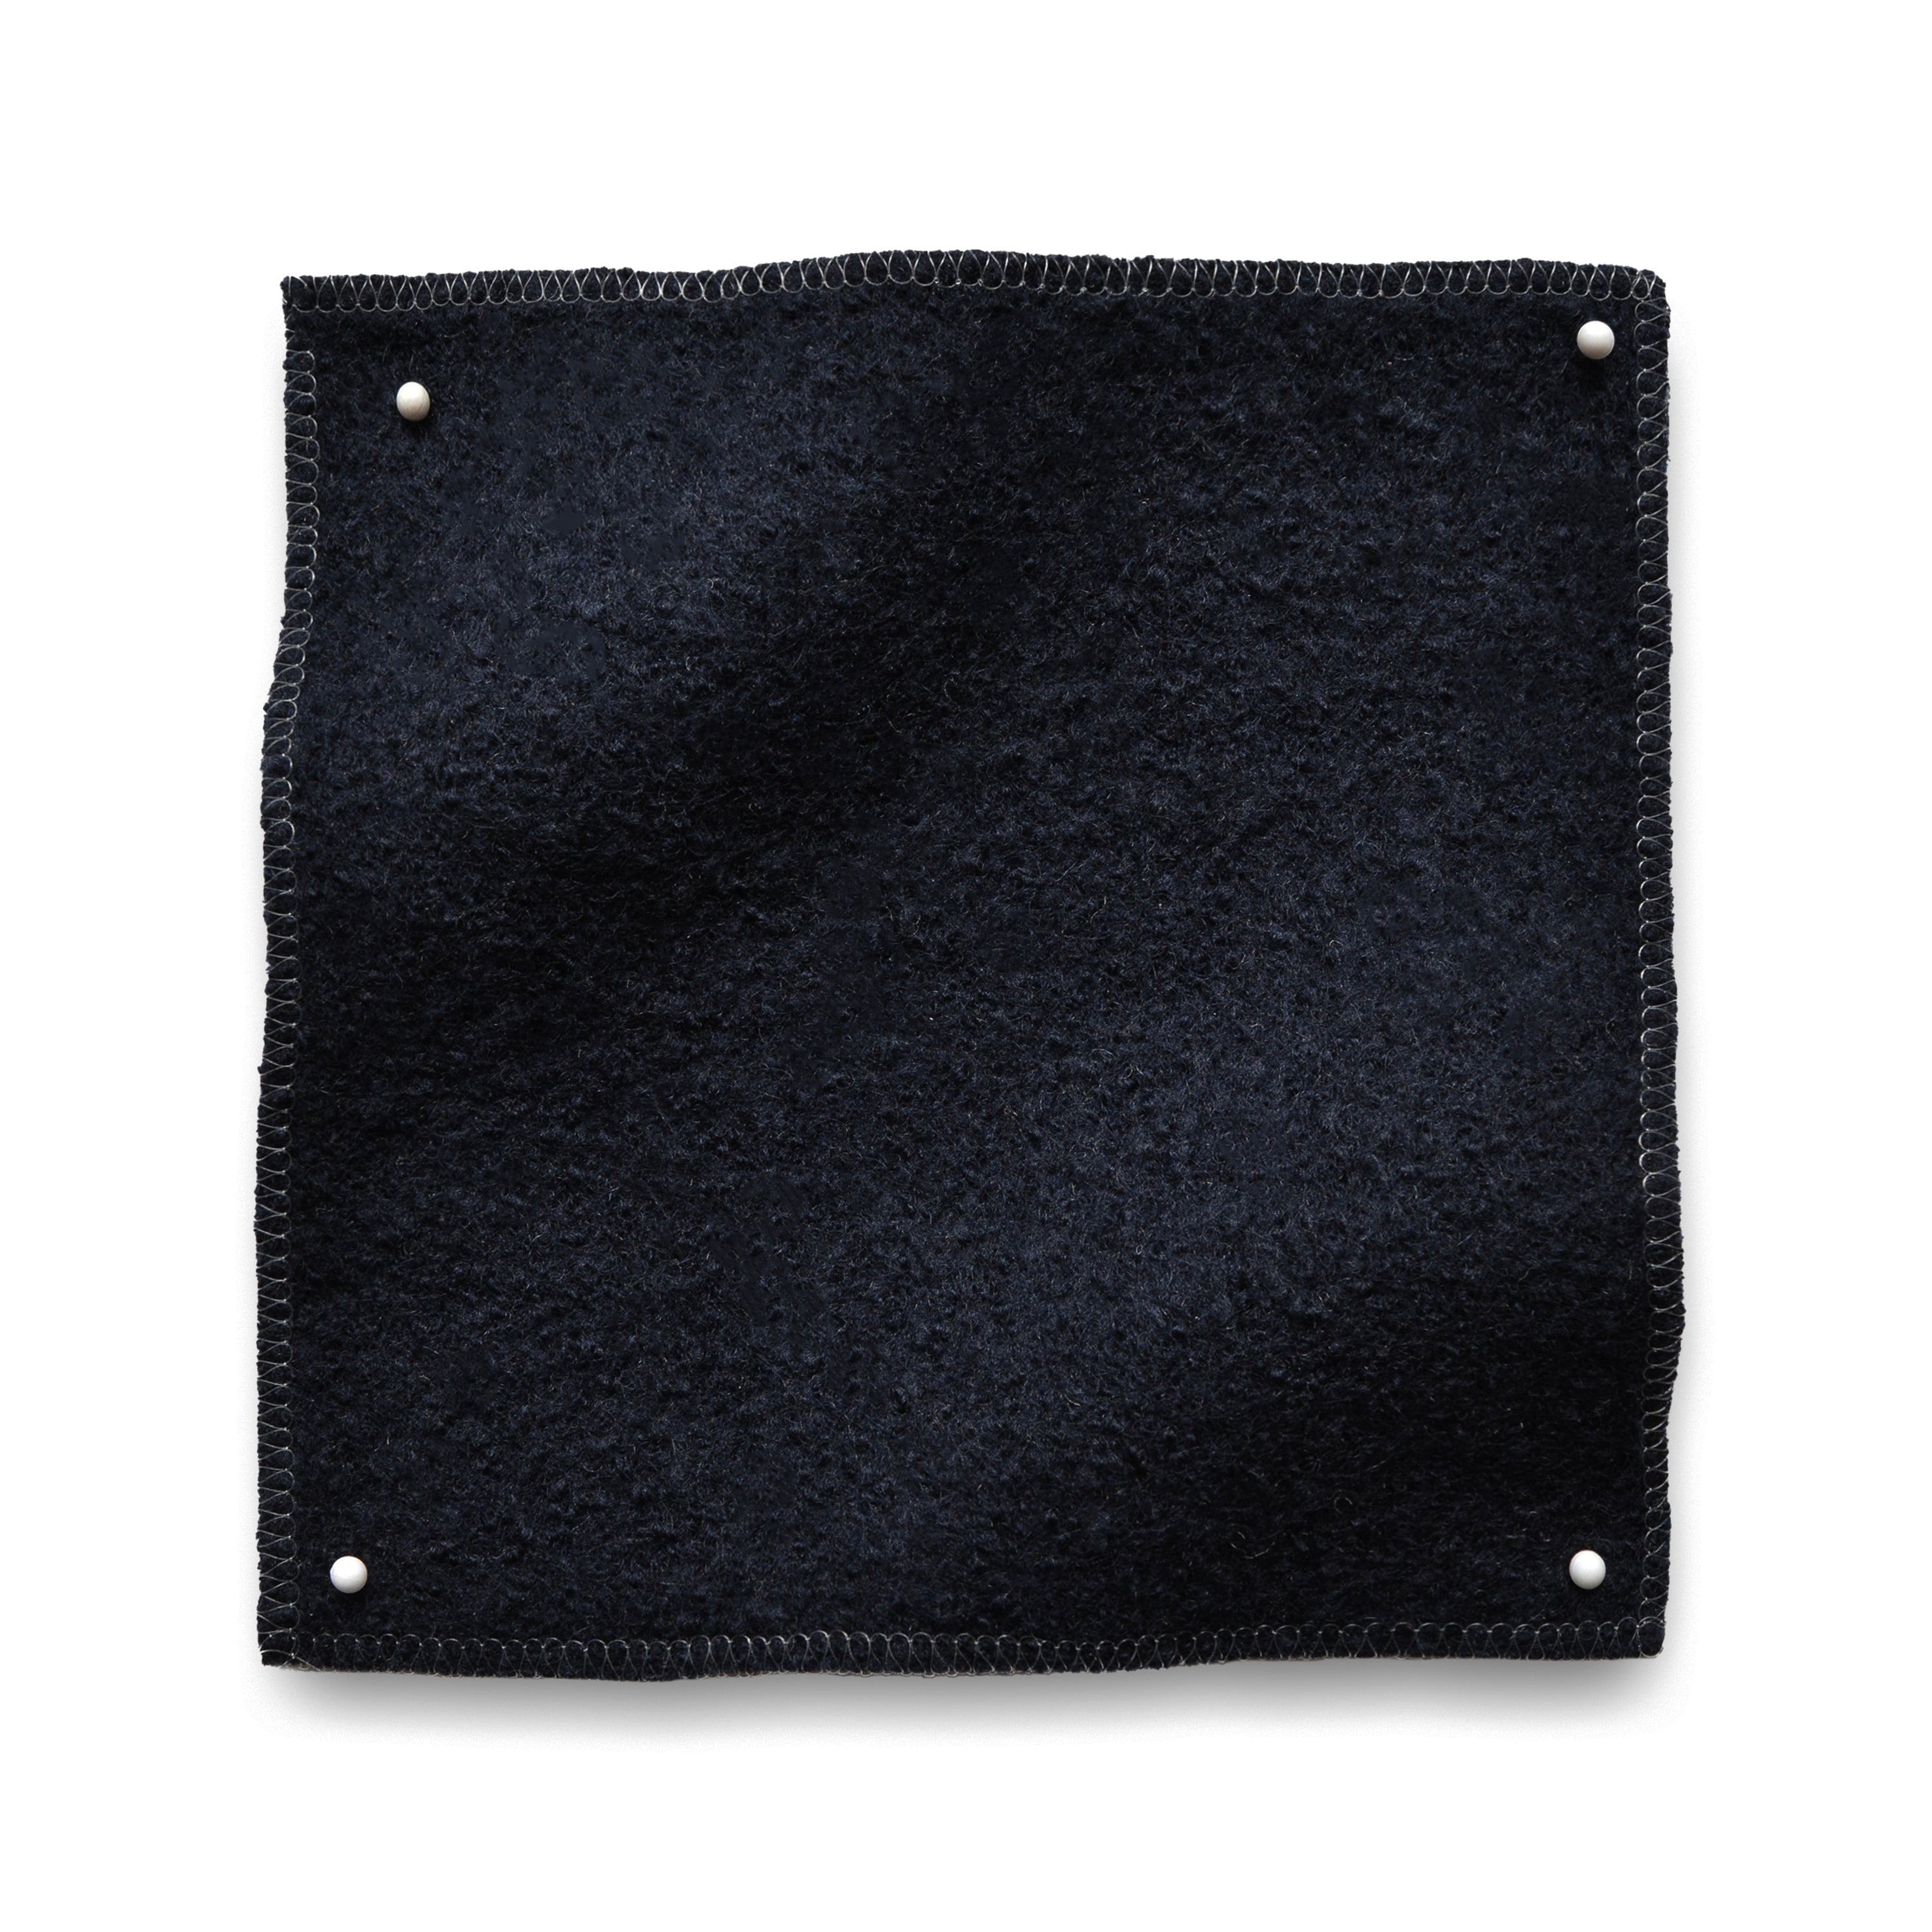 Wool boucle swatch pinned in all corners in dark navy blue